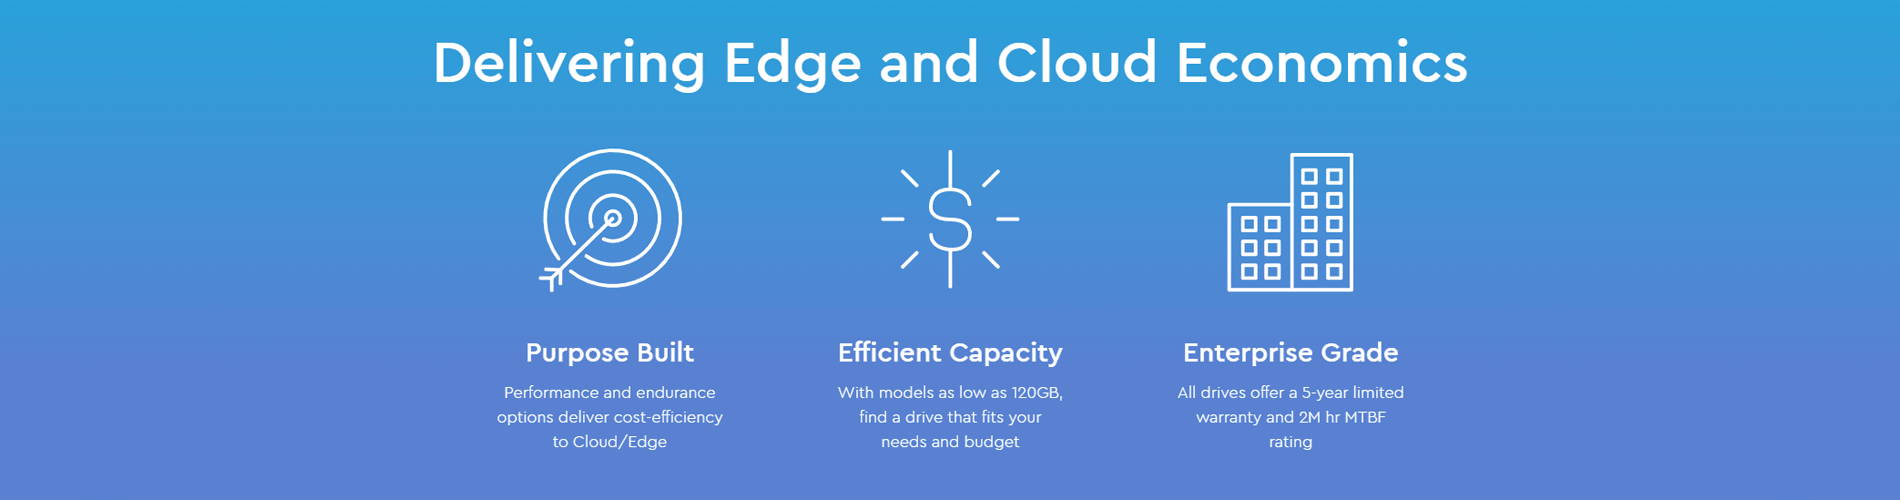 Delivering Edge and Cloud Economics